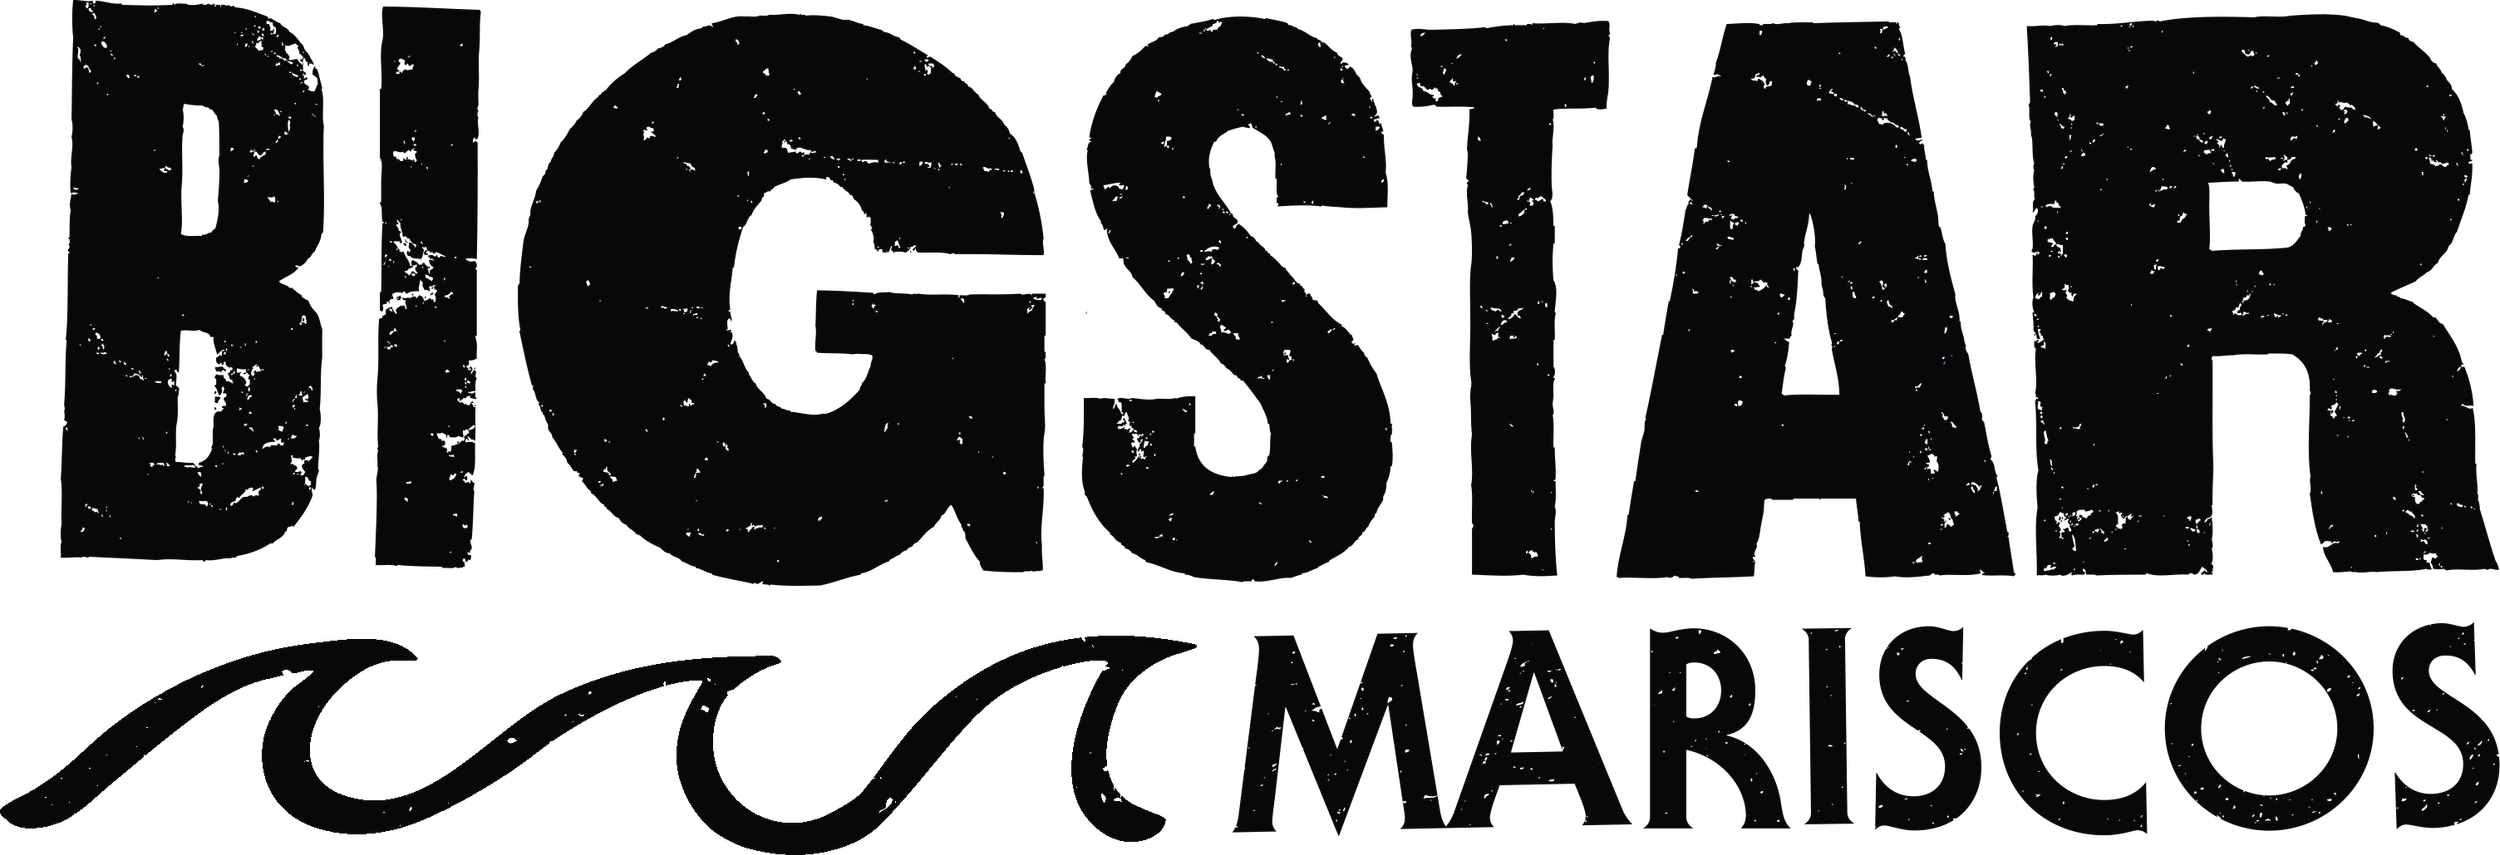 Big Star Mariscos Logo Black & White.png